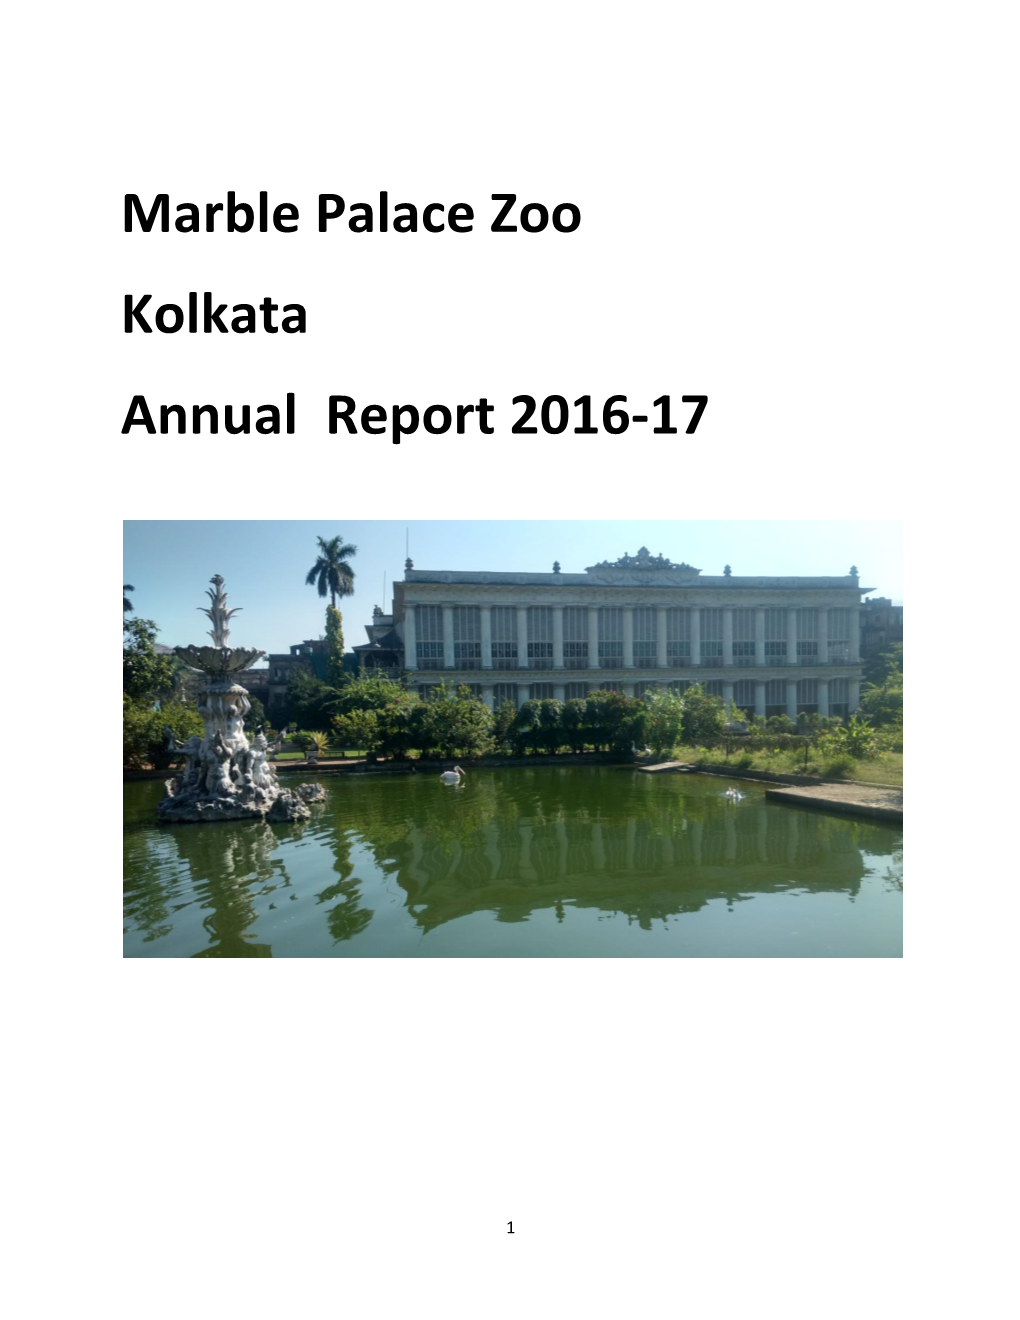 Marble Palace Zoo Kolkata Annual Report 2016-17